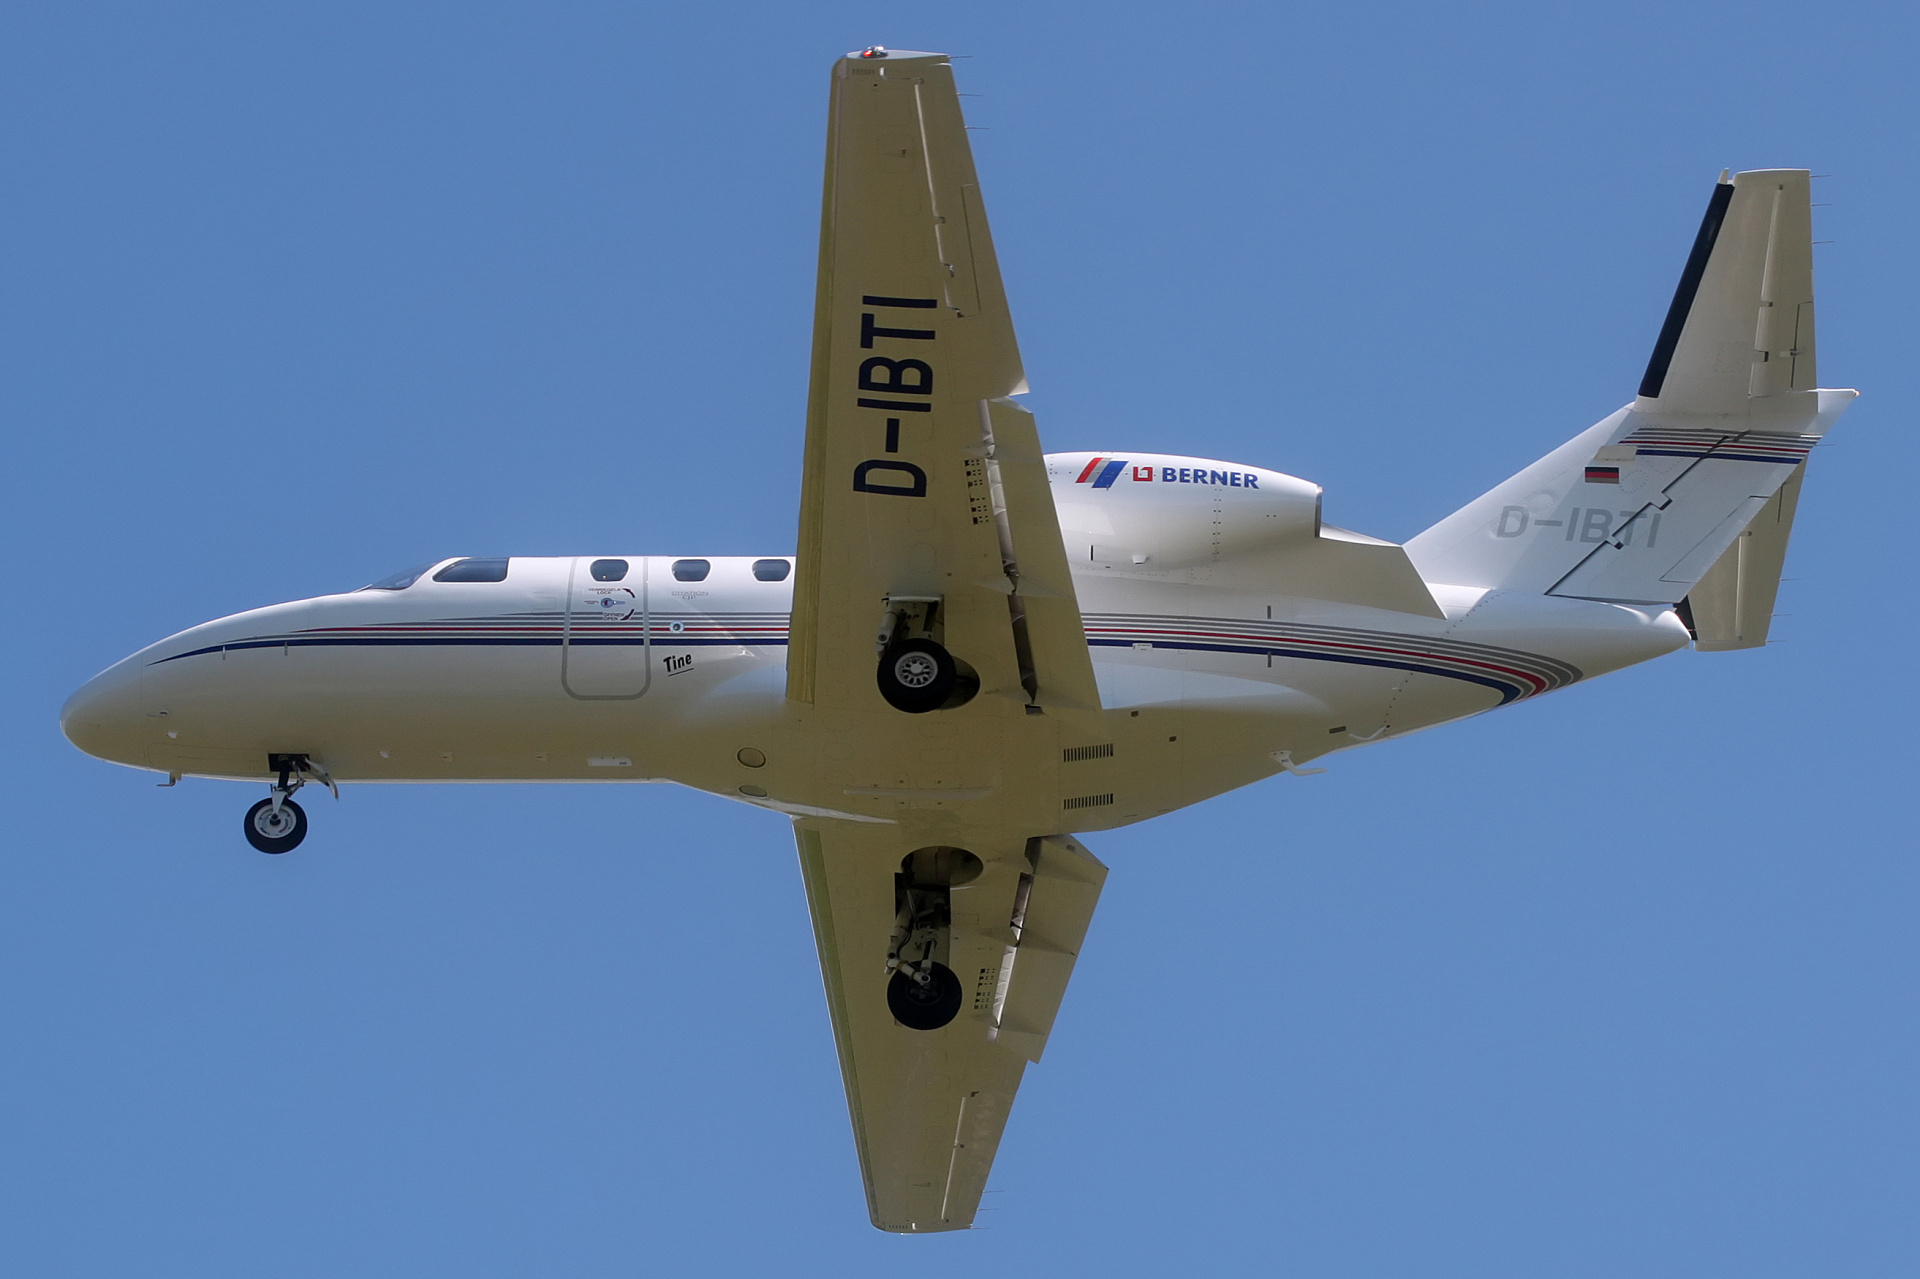 D-IBTI, Berner (Samoloty » Spotting na EPWA » Cessna 525 (CitationJet) i pochodne wersje)